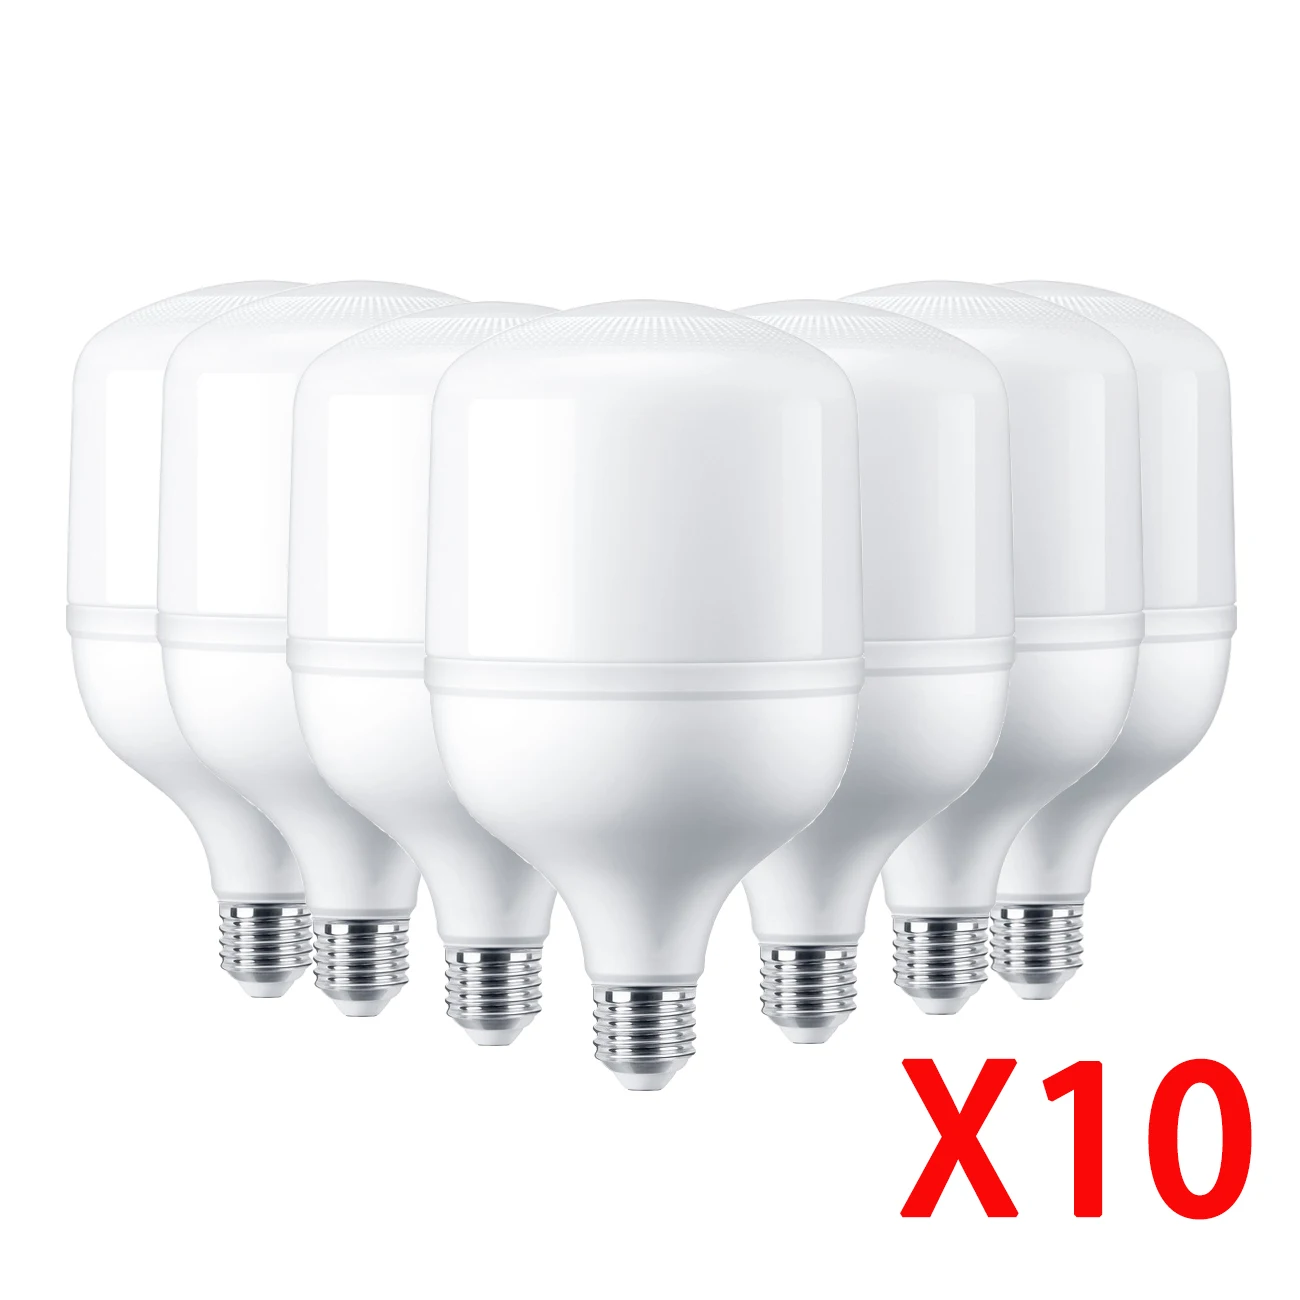 

10pcs/lot LED Bulb E27 E14 60W 50W 40W 30W 20W 15W 10W 7W 5W 3W Lampada LED Light AC 220V Bombilla Spotlight Lighting Lamp